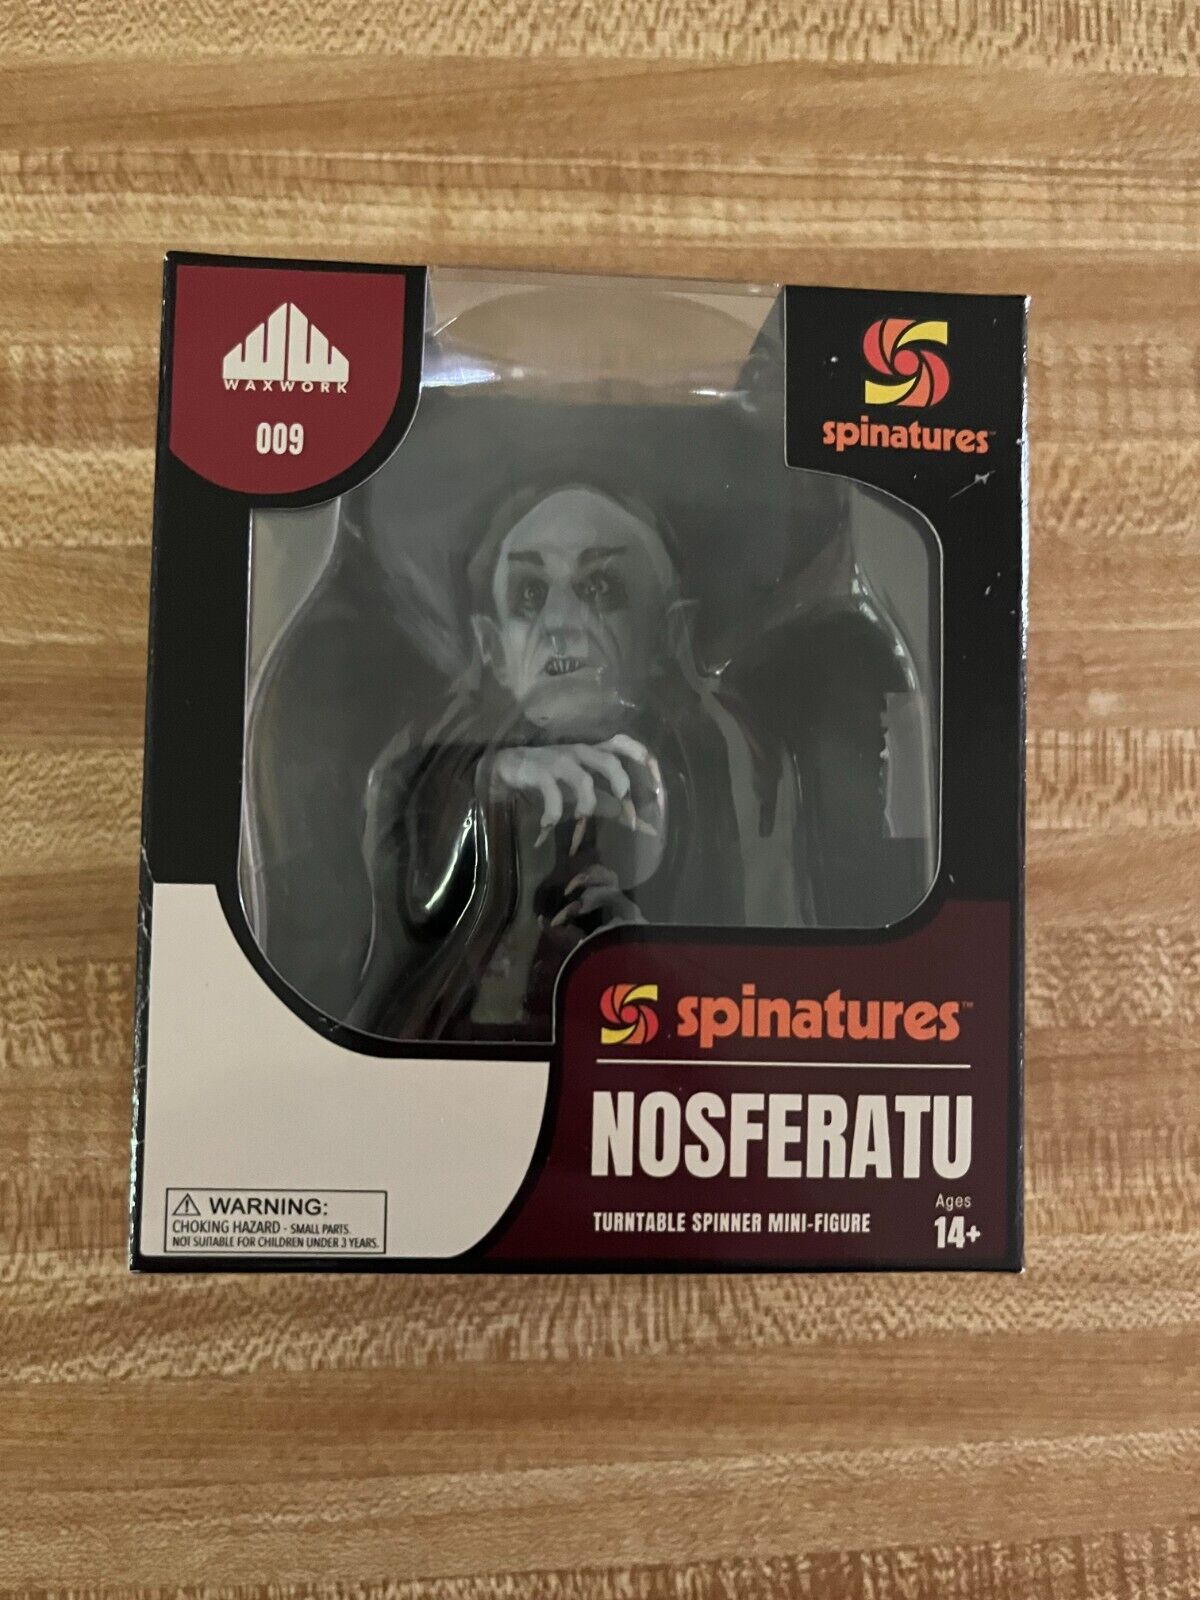 Nosferatu Spinature Vinyl Figure from Waxwork Records